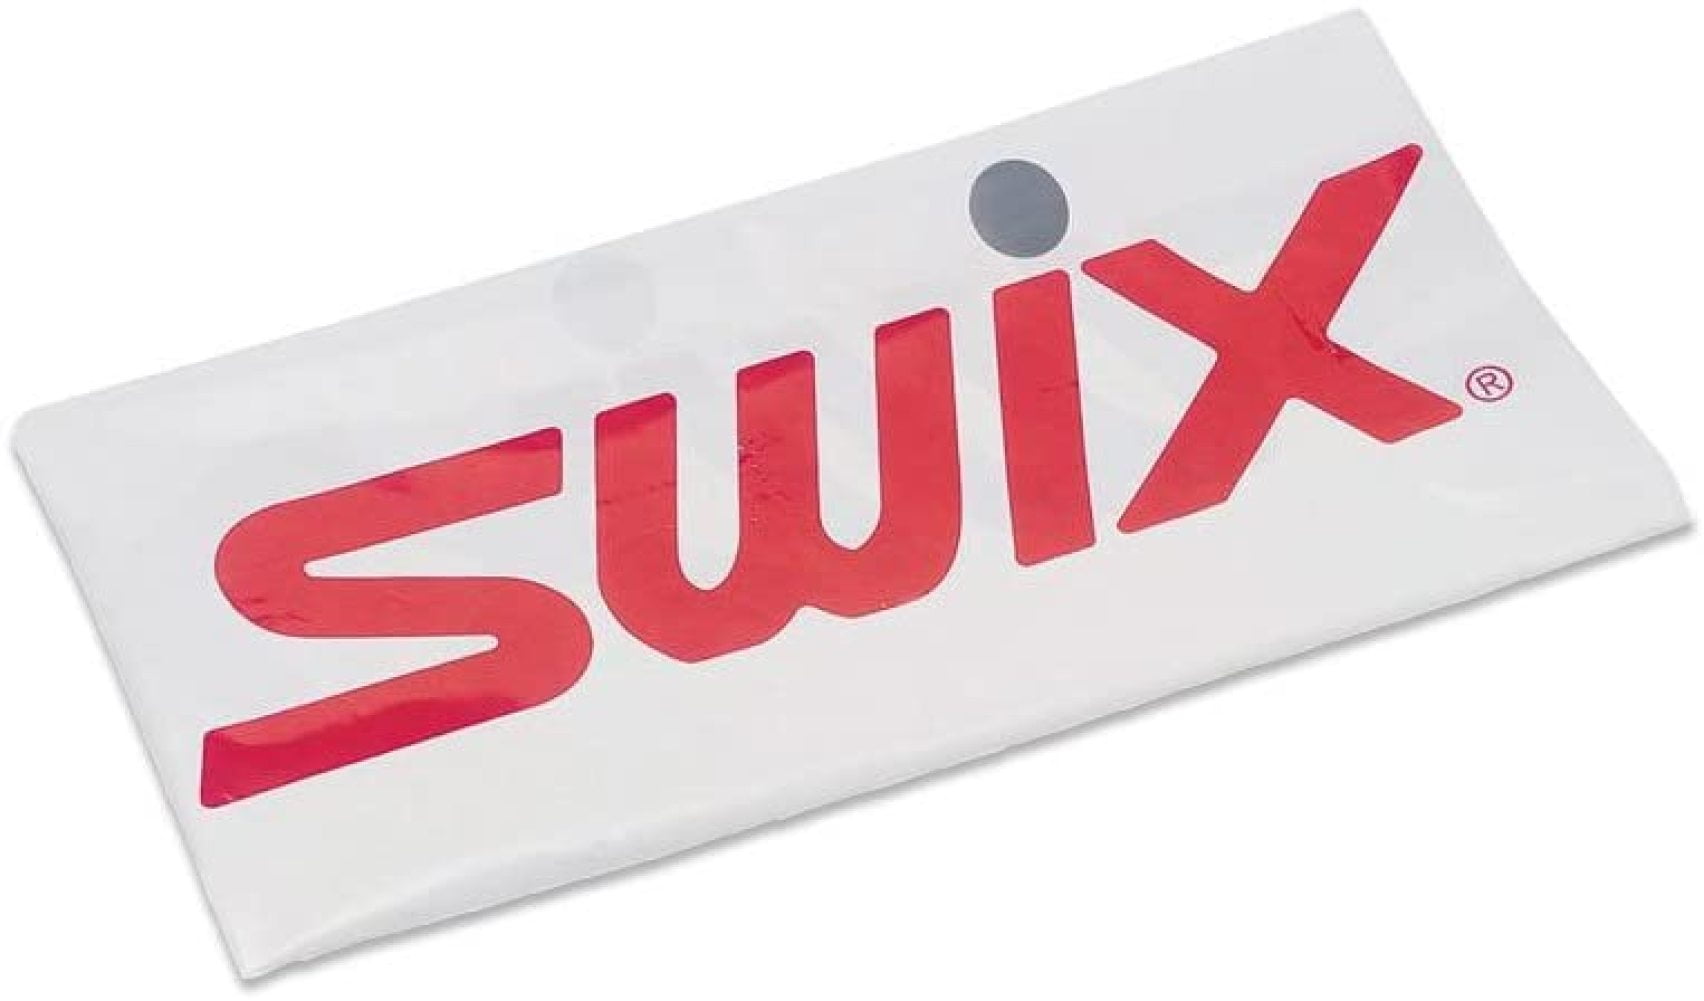 Swix Ski Wax Floor Waxing Protection Ground Cover Sheet